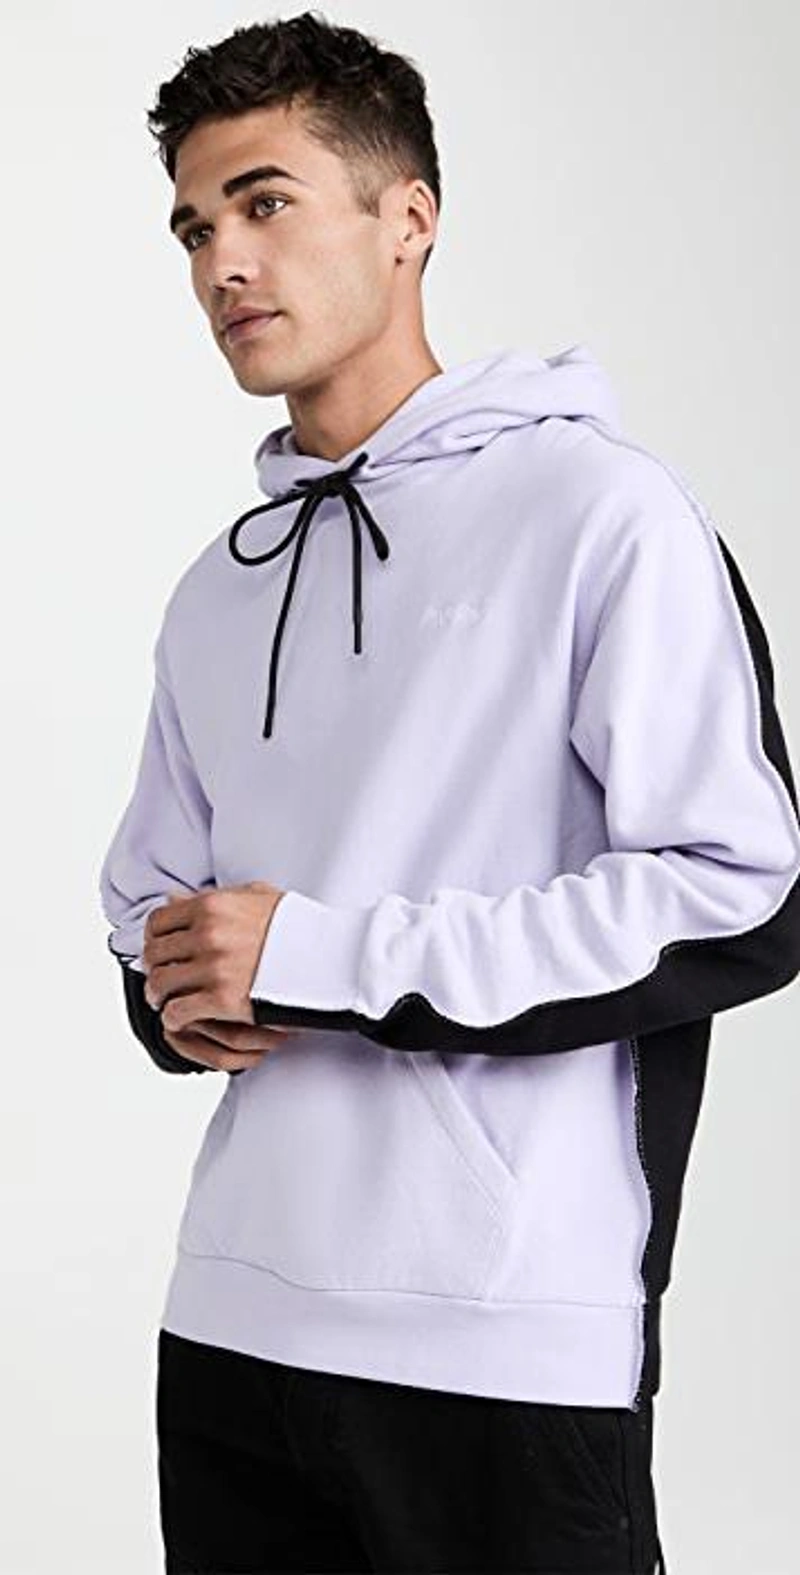 shopbop.com's Posts | Wearing: Marni Sweatshirt In Light Lila/black; Reebok White Classic Low Top Leather Sneakers